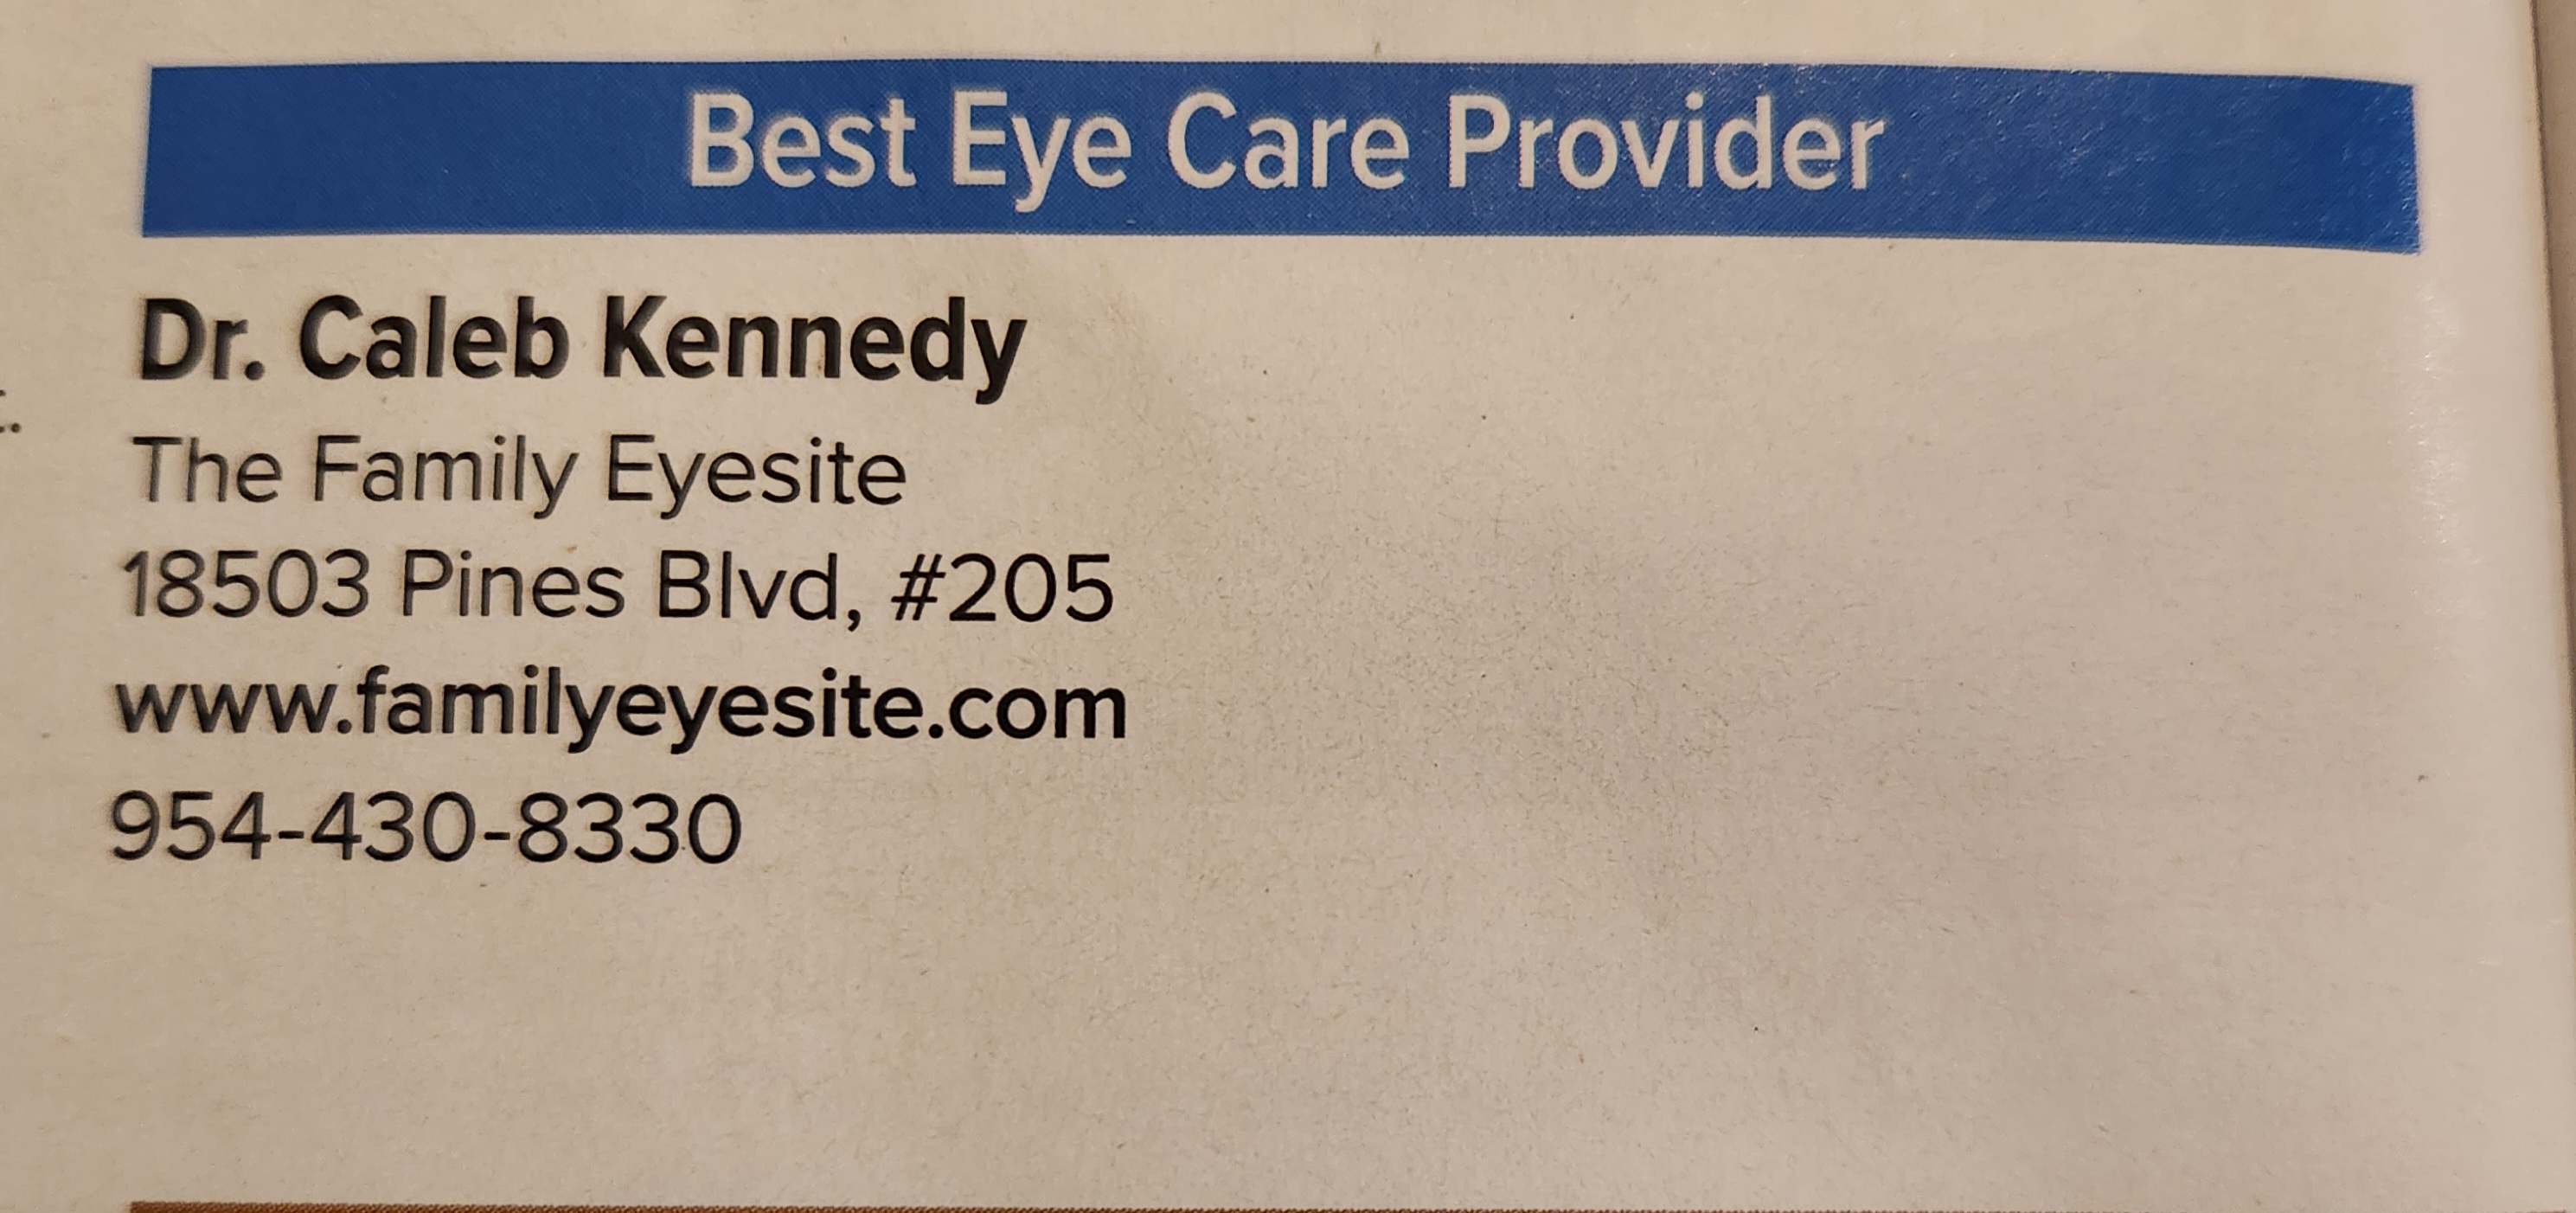 best eye care provider caleb kennedy